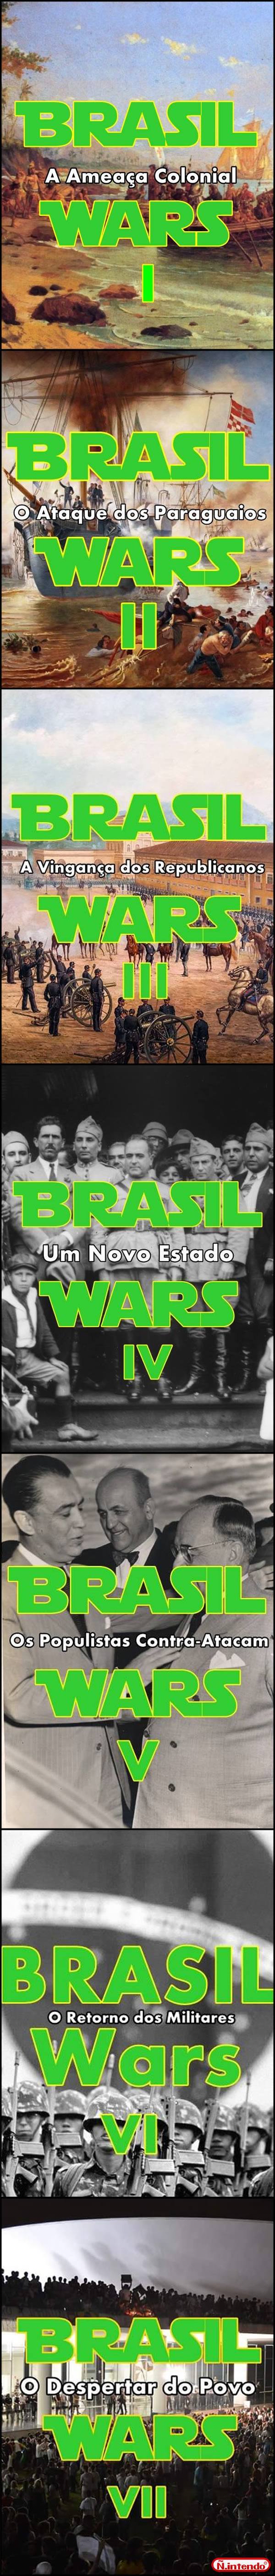 Brasil_Wars